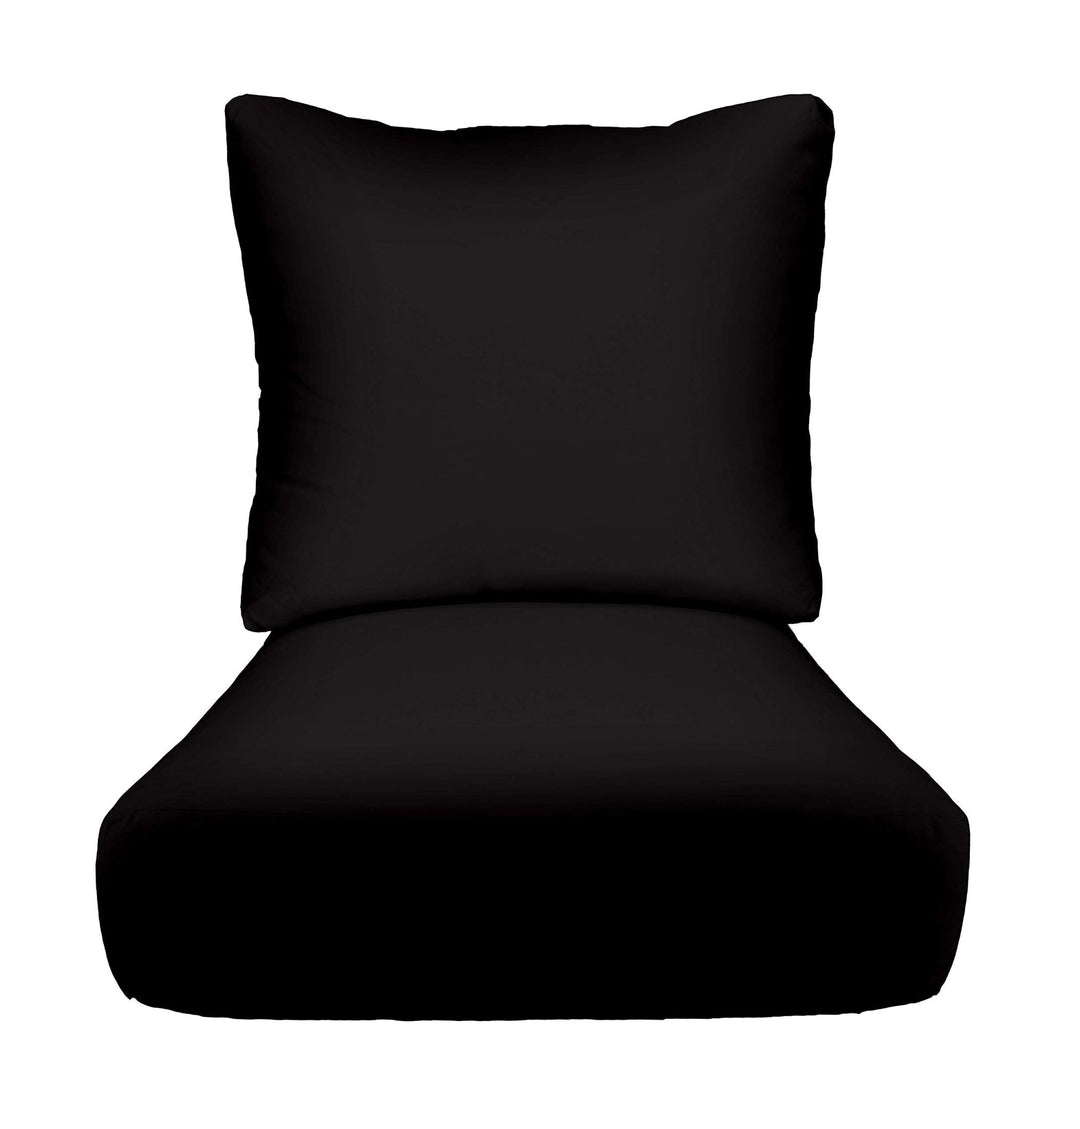 Deep Seating Pillow Back Chair Cushion Set, 25" x 25" x 5" Seat and 25" x 21" Back, Sunbrella Solids - RSH Decor